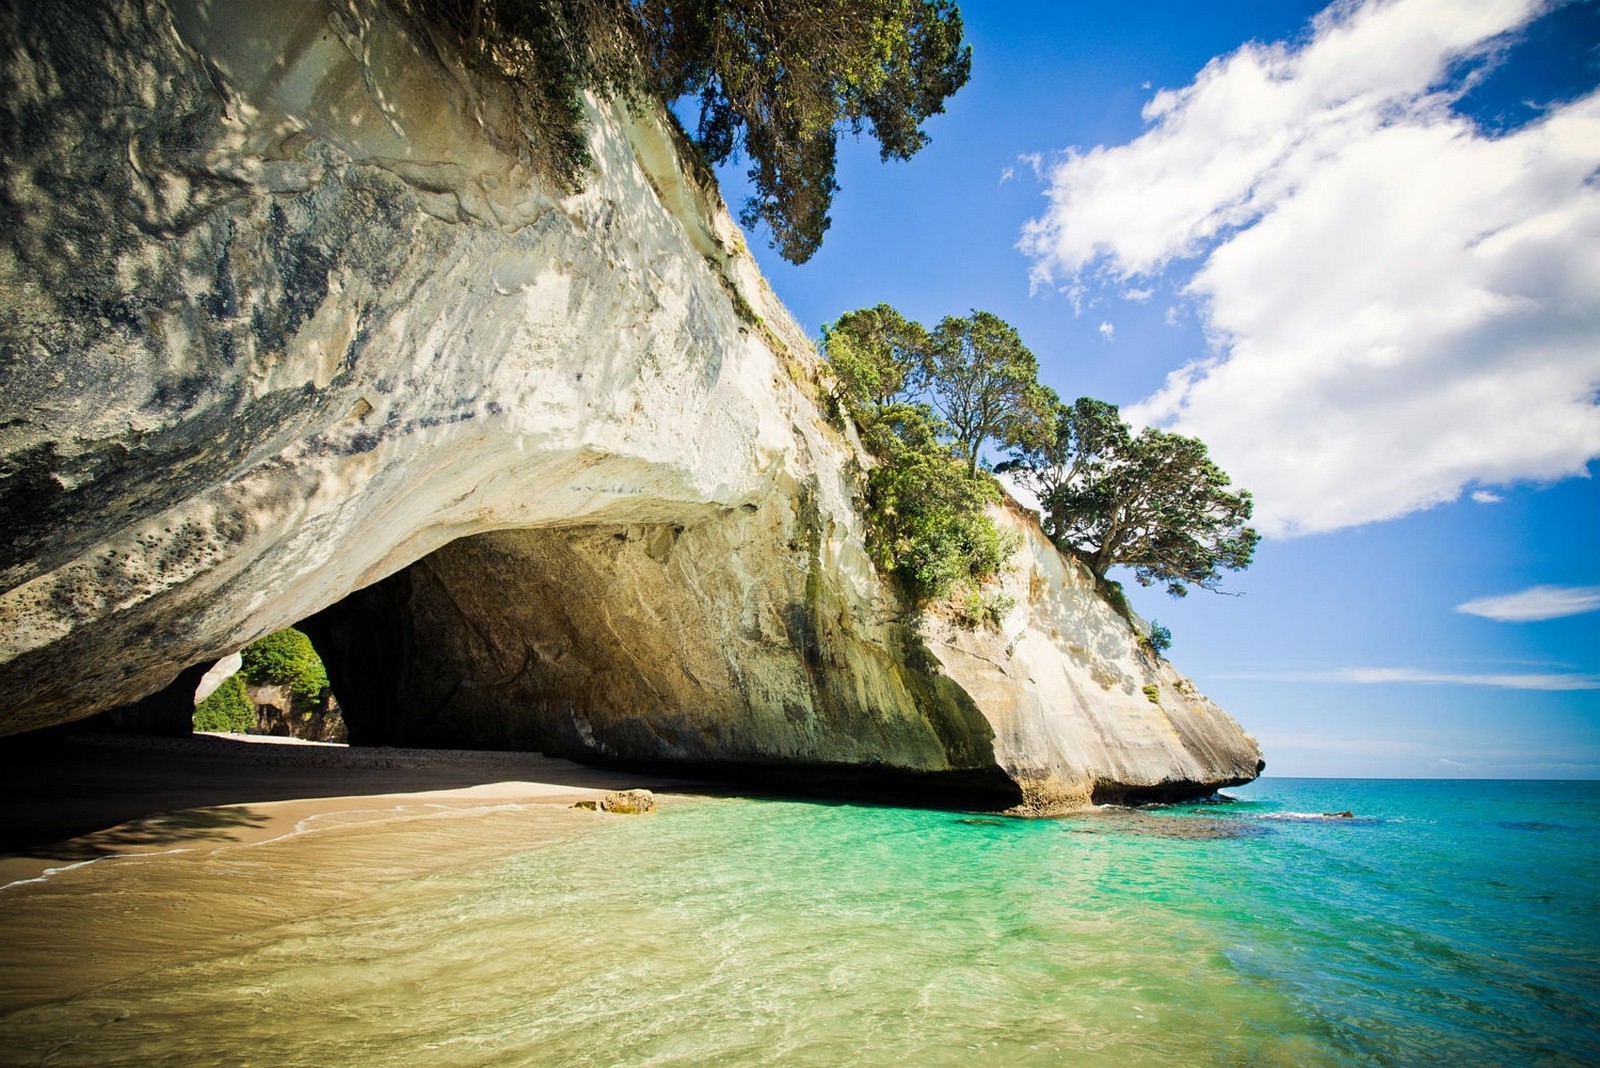 nature Landscape Photography Cave Rock Trees Beach Sea